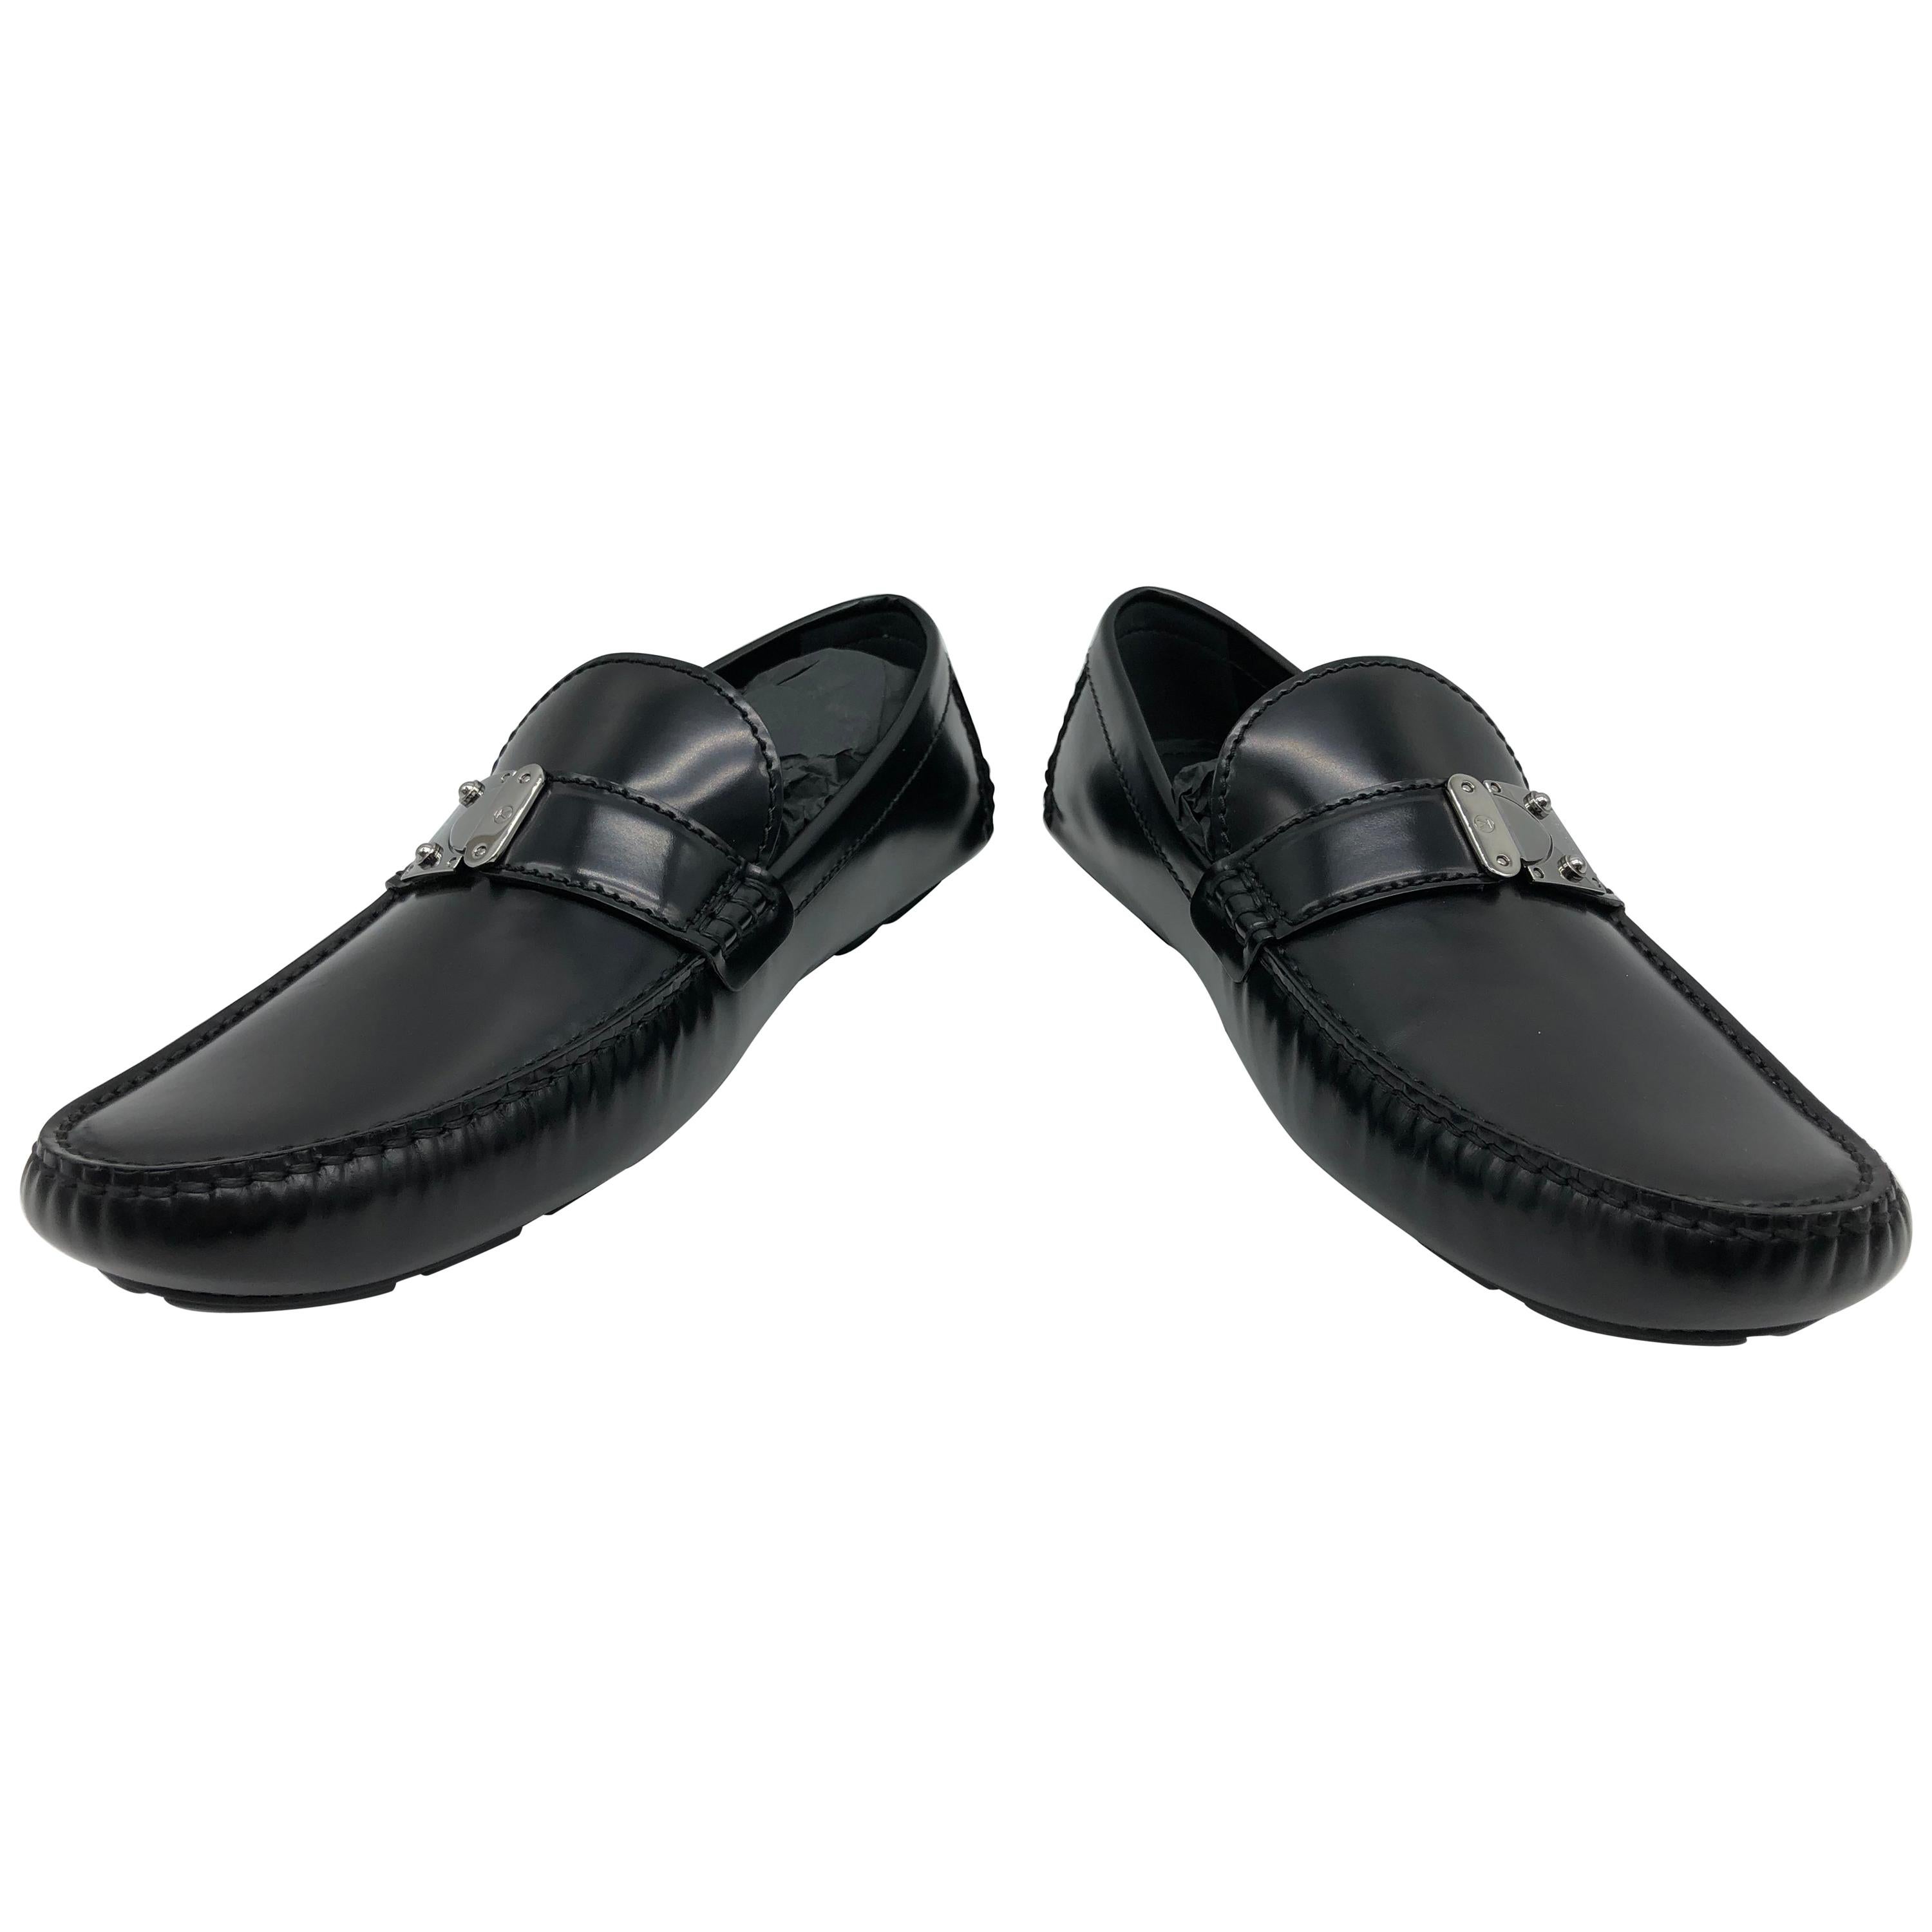 Louis Vuitton men Loafers in black leather // Model: RaceTrack car shoe // New!